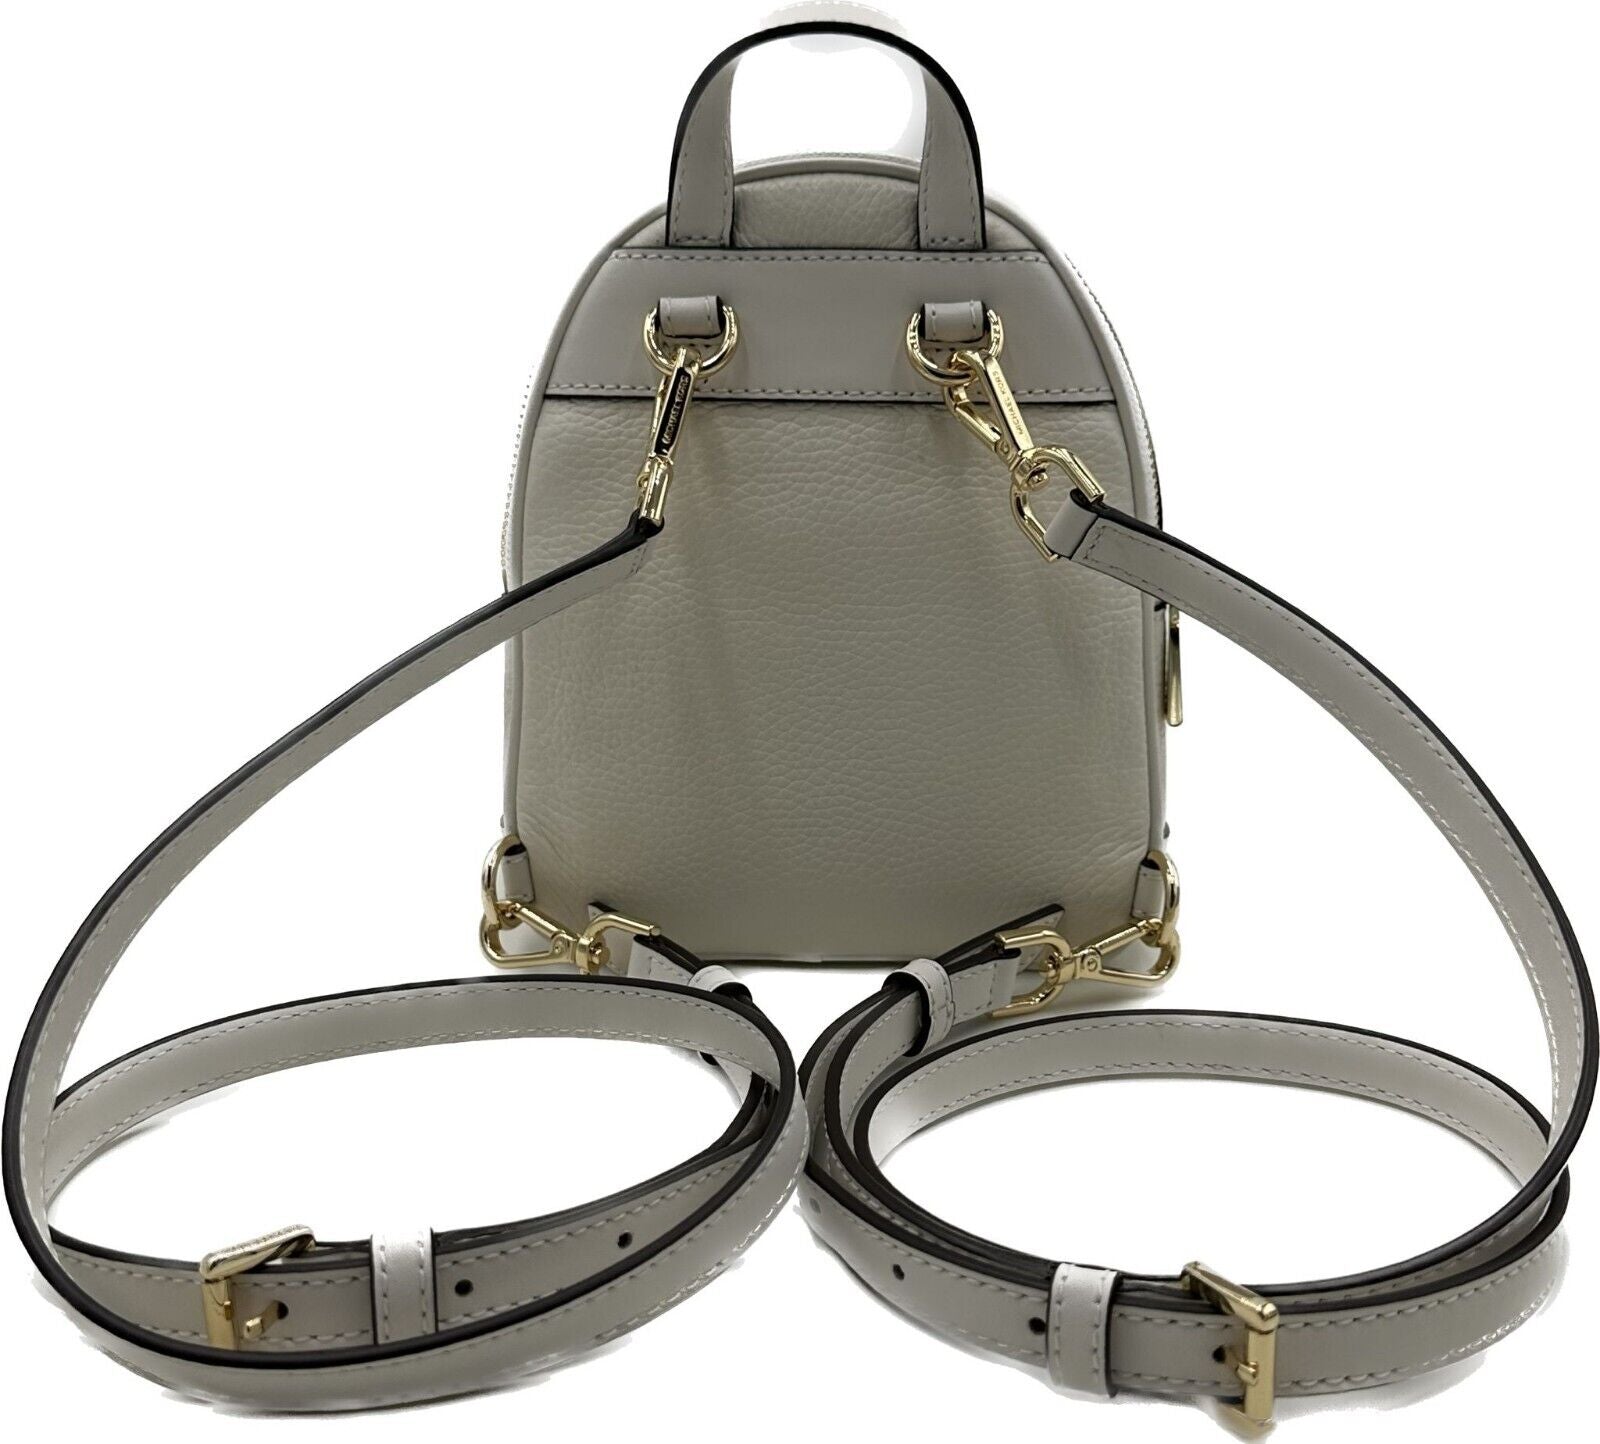 Michael Kors Brooklyn Extra Small Convertible Backpack - 196163132051